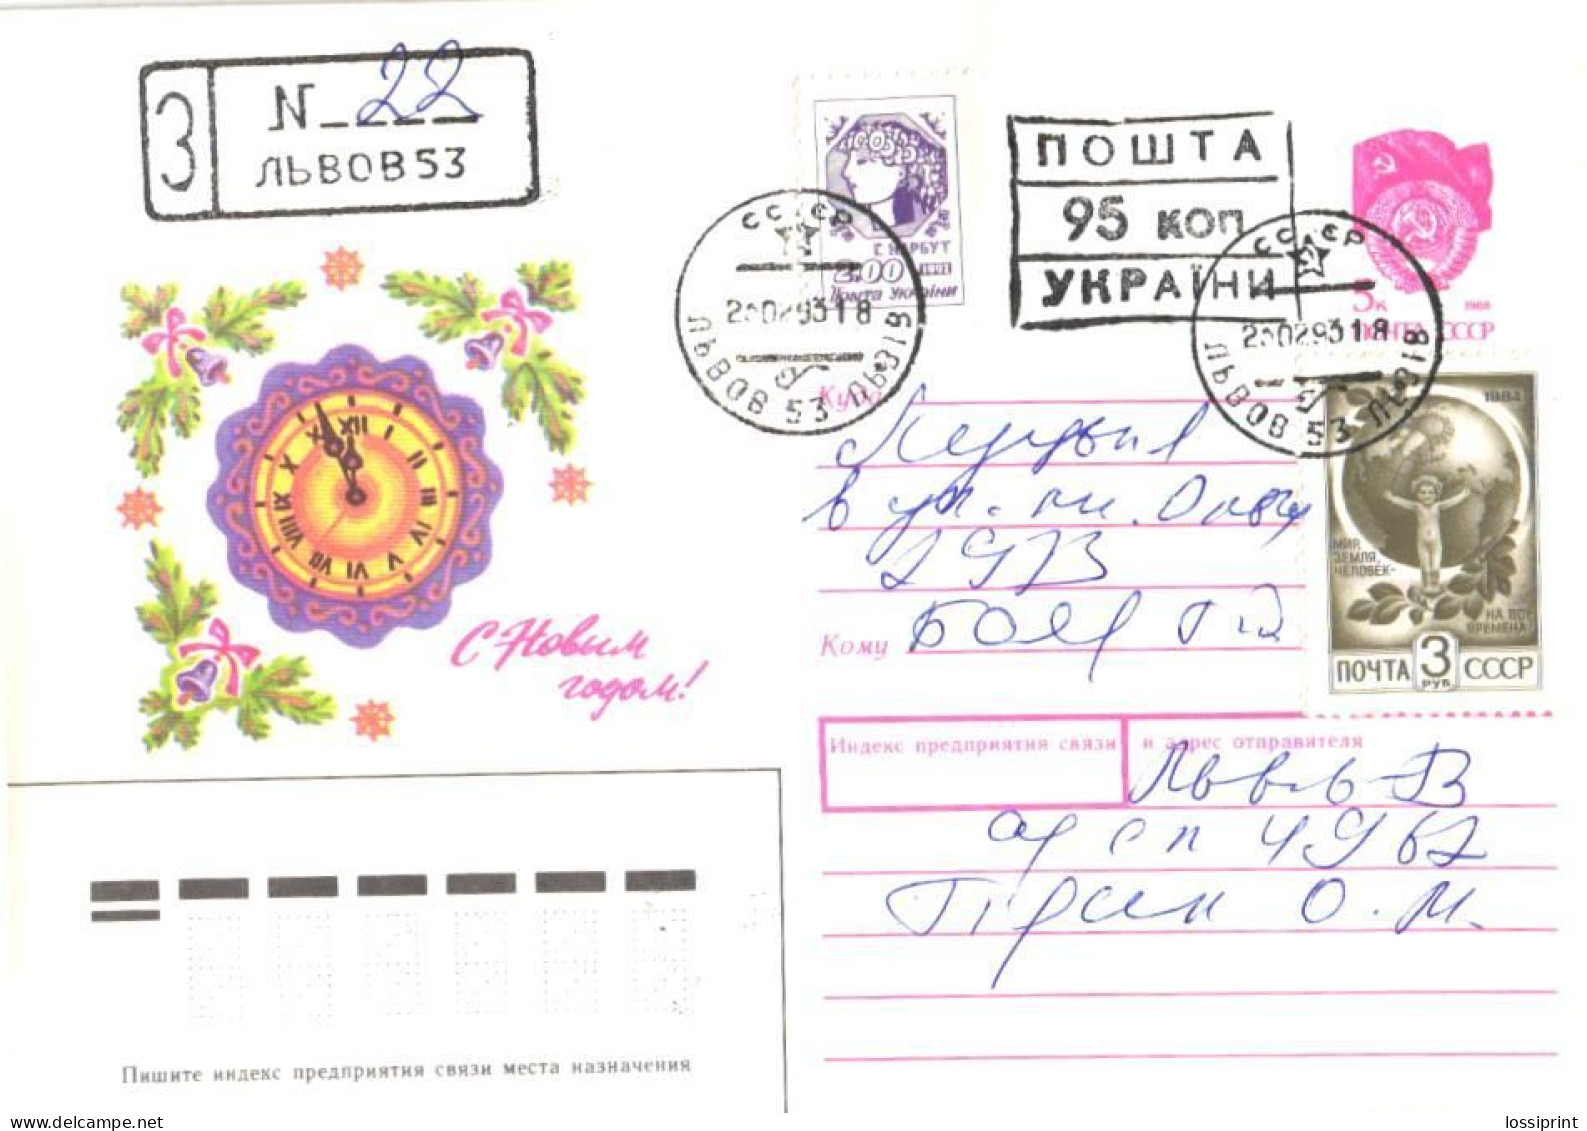 Ukraine:Ukraina:Registered Letter From Lvov 53 With Stamp Cancellation And Ukraine And Soviet Union Stamps, 1993 - Ukraine